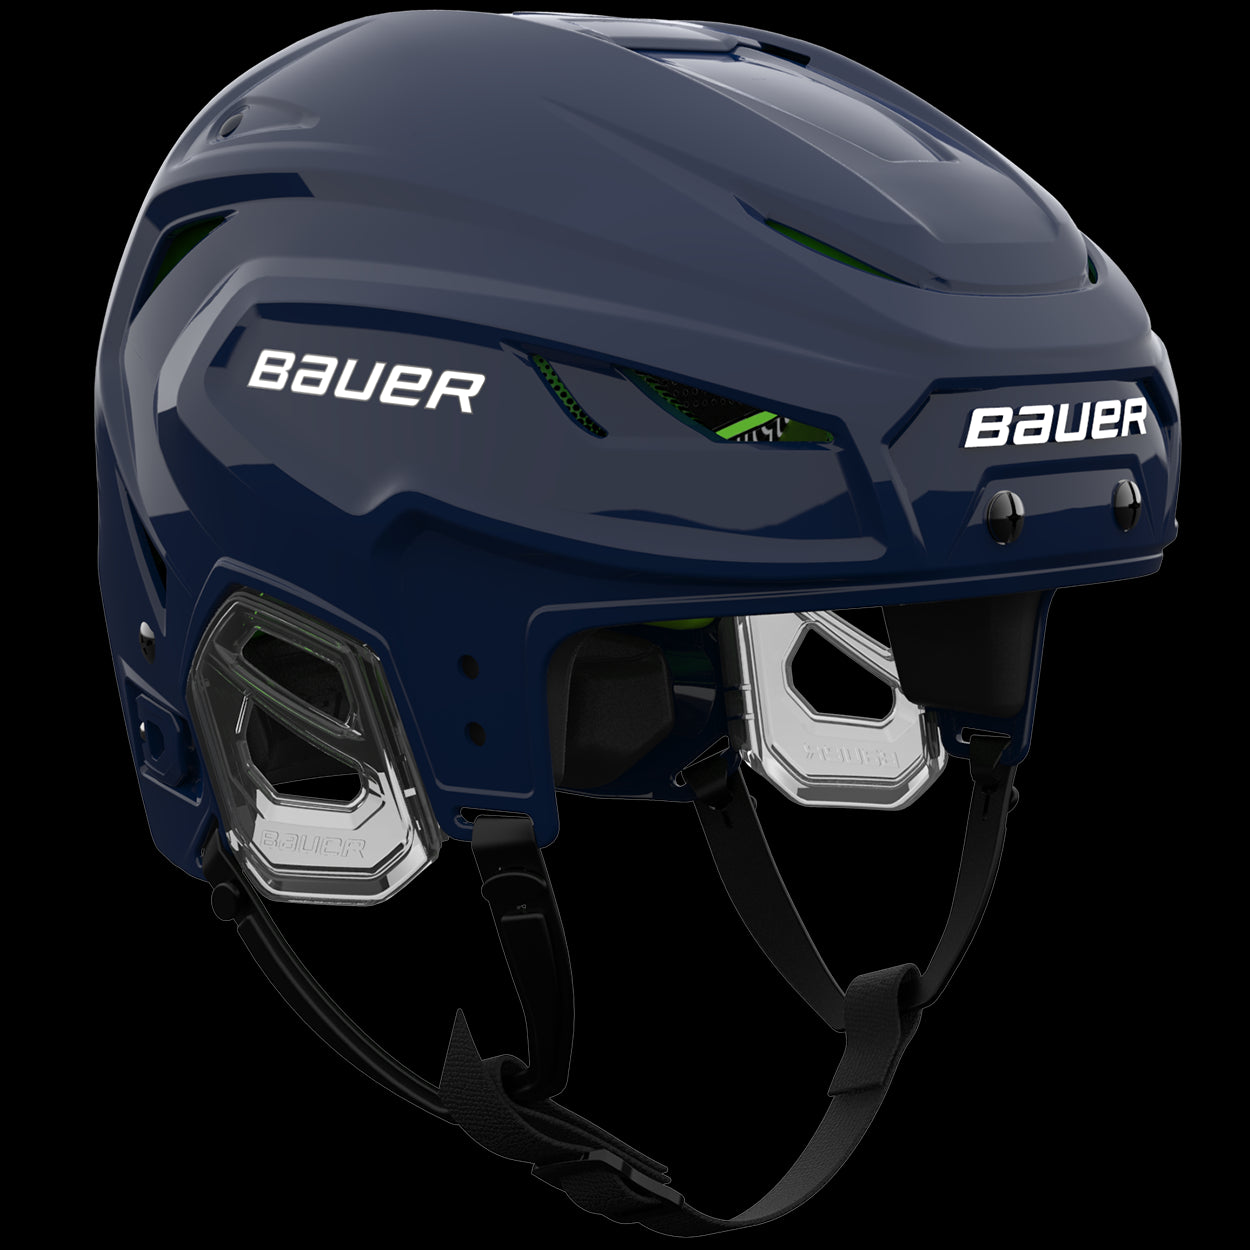 Bauer Vapor Hyperlite helmet